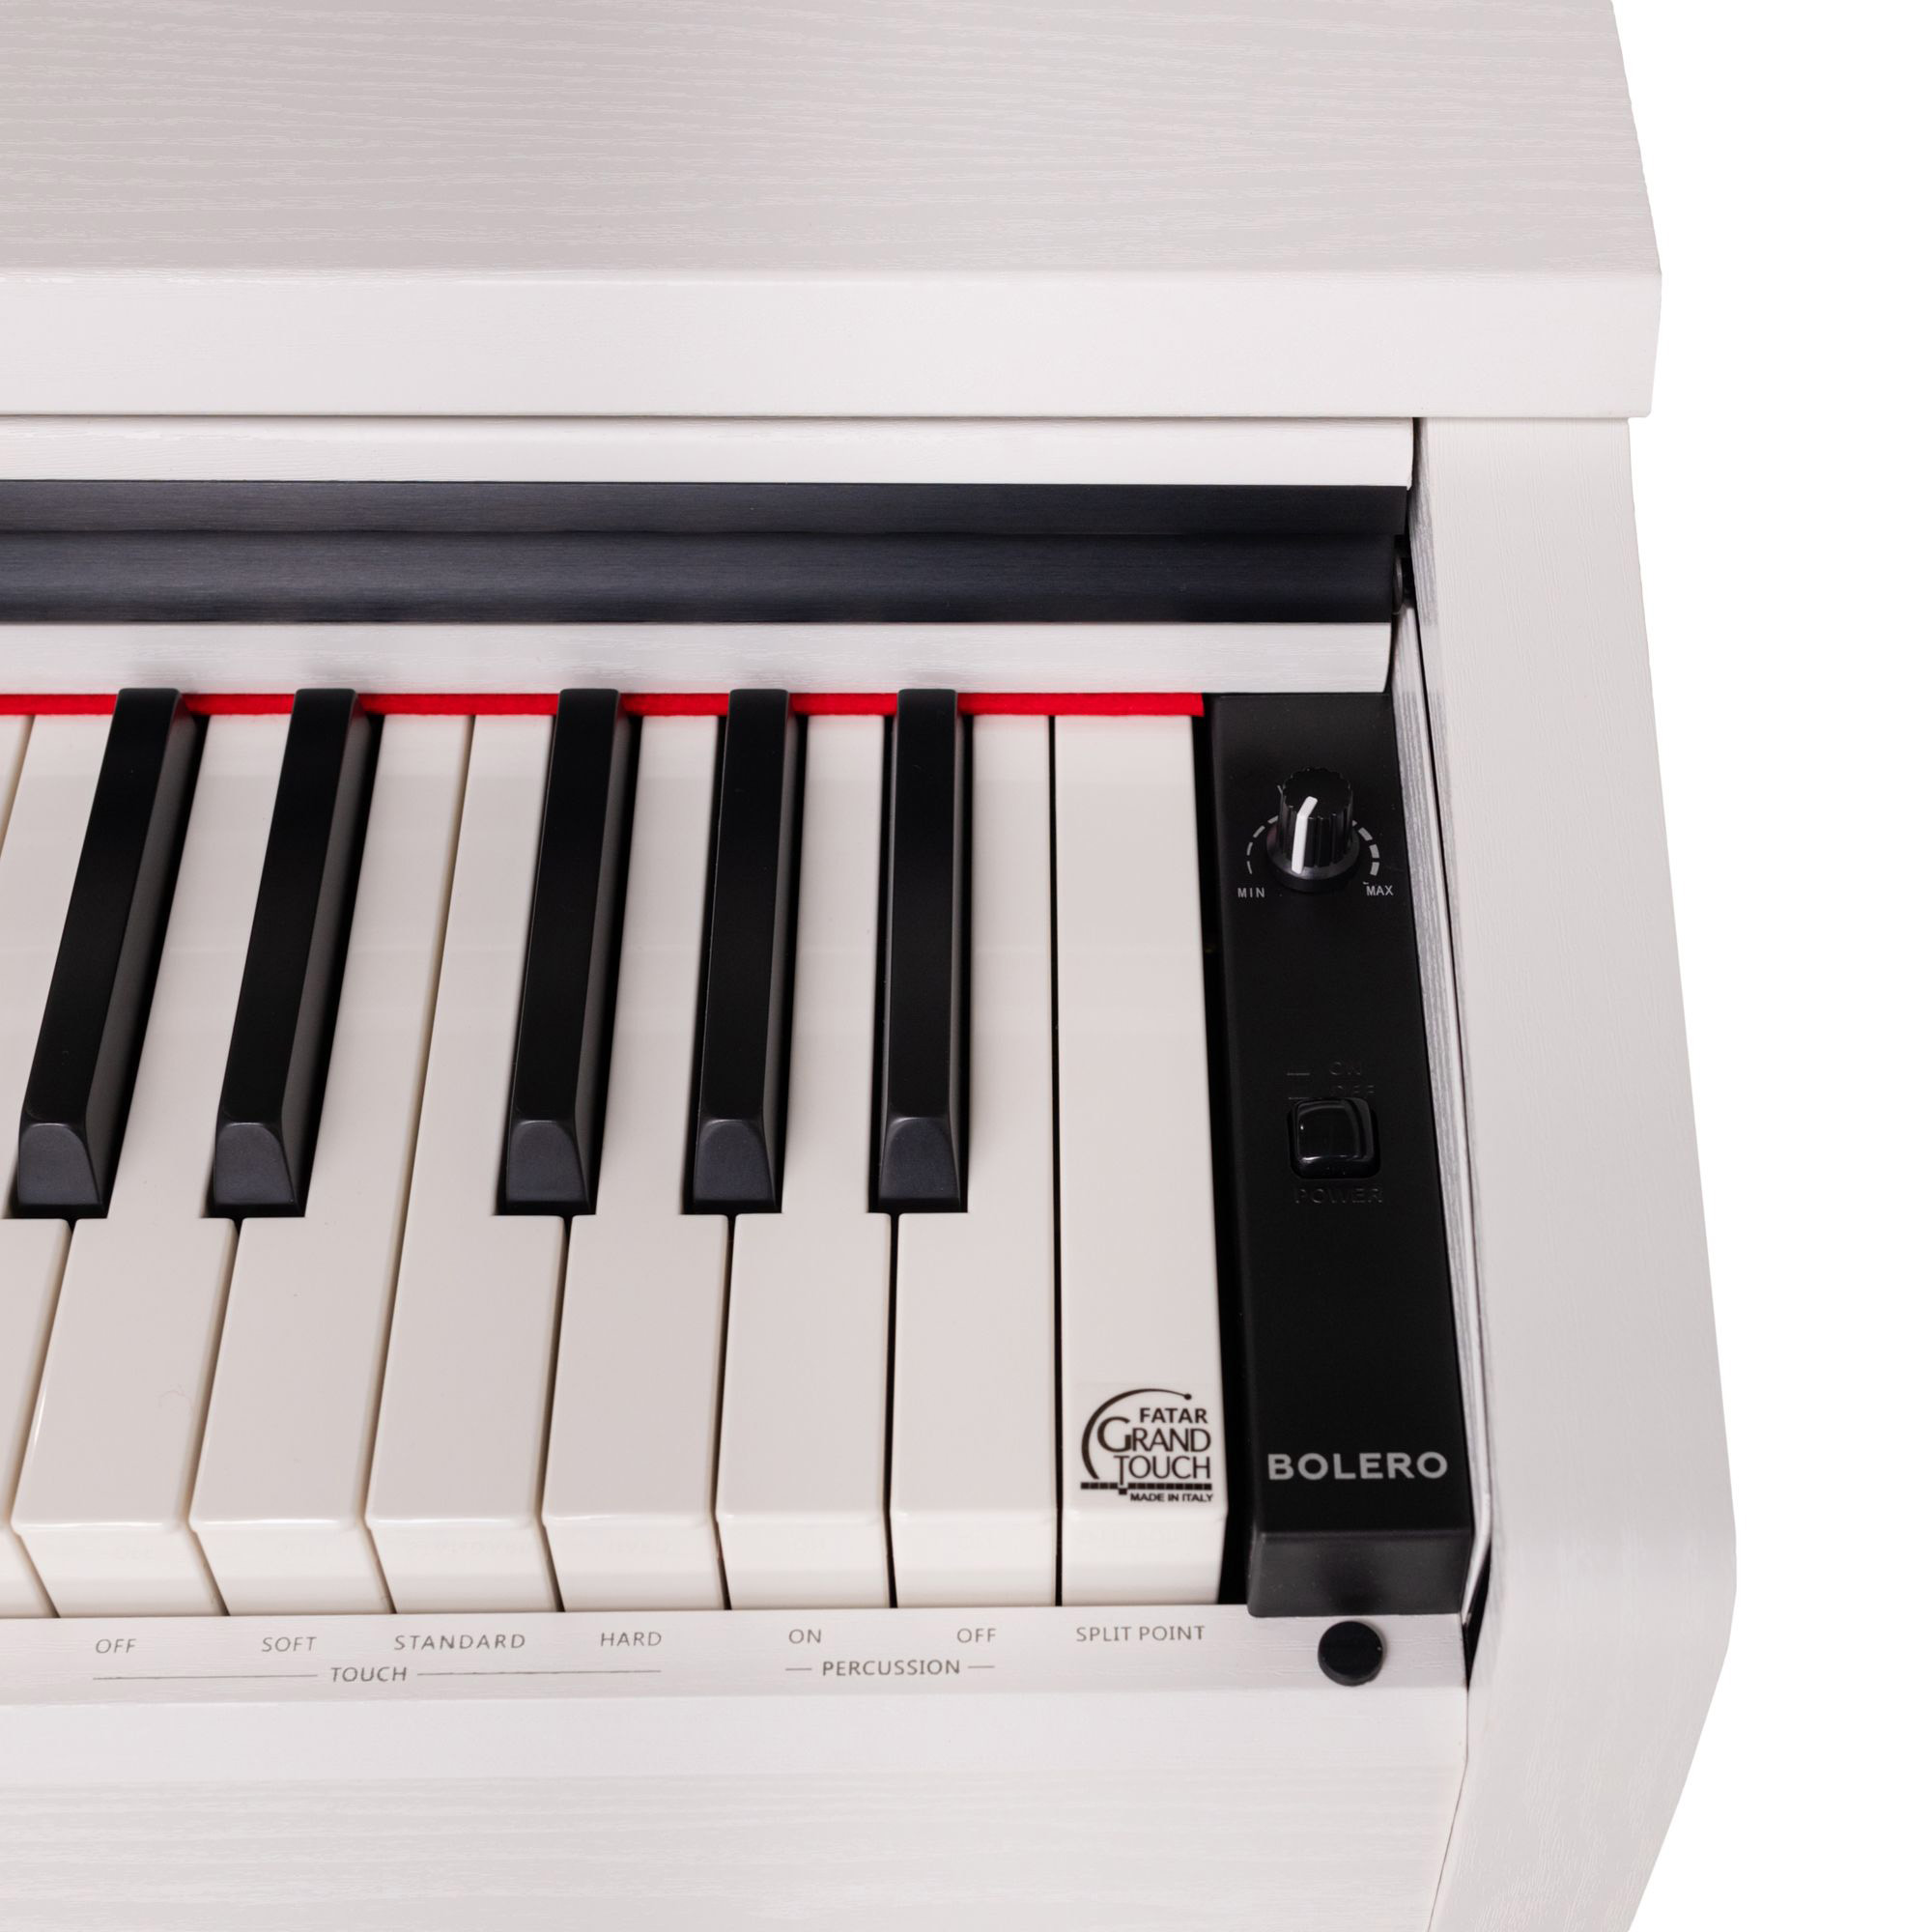 Rockdale Bolero White Цифровые пианино